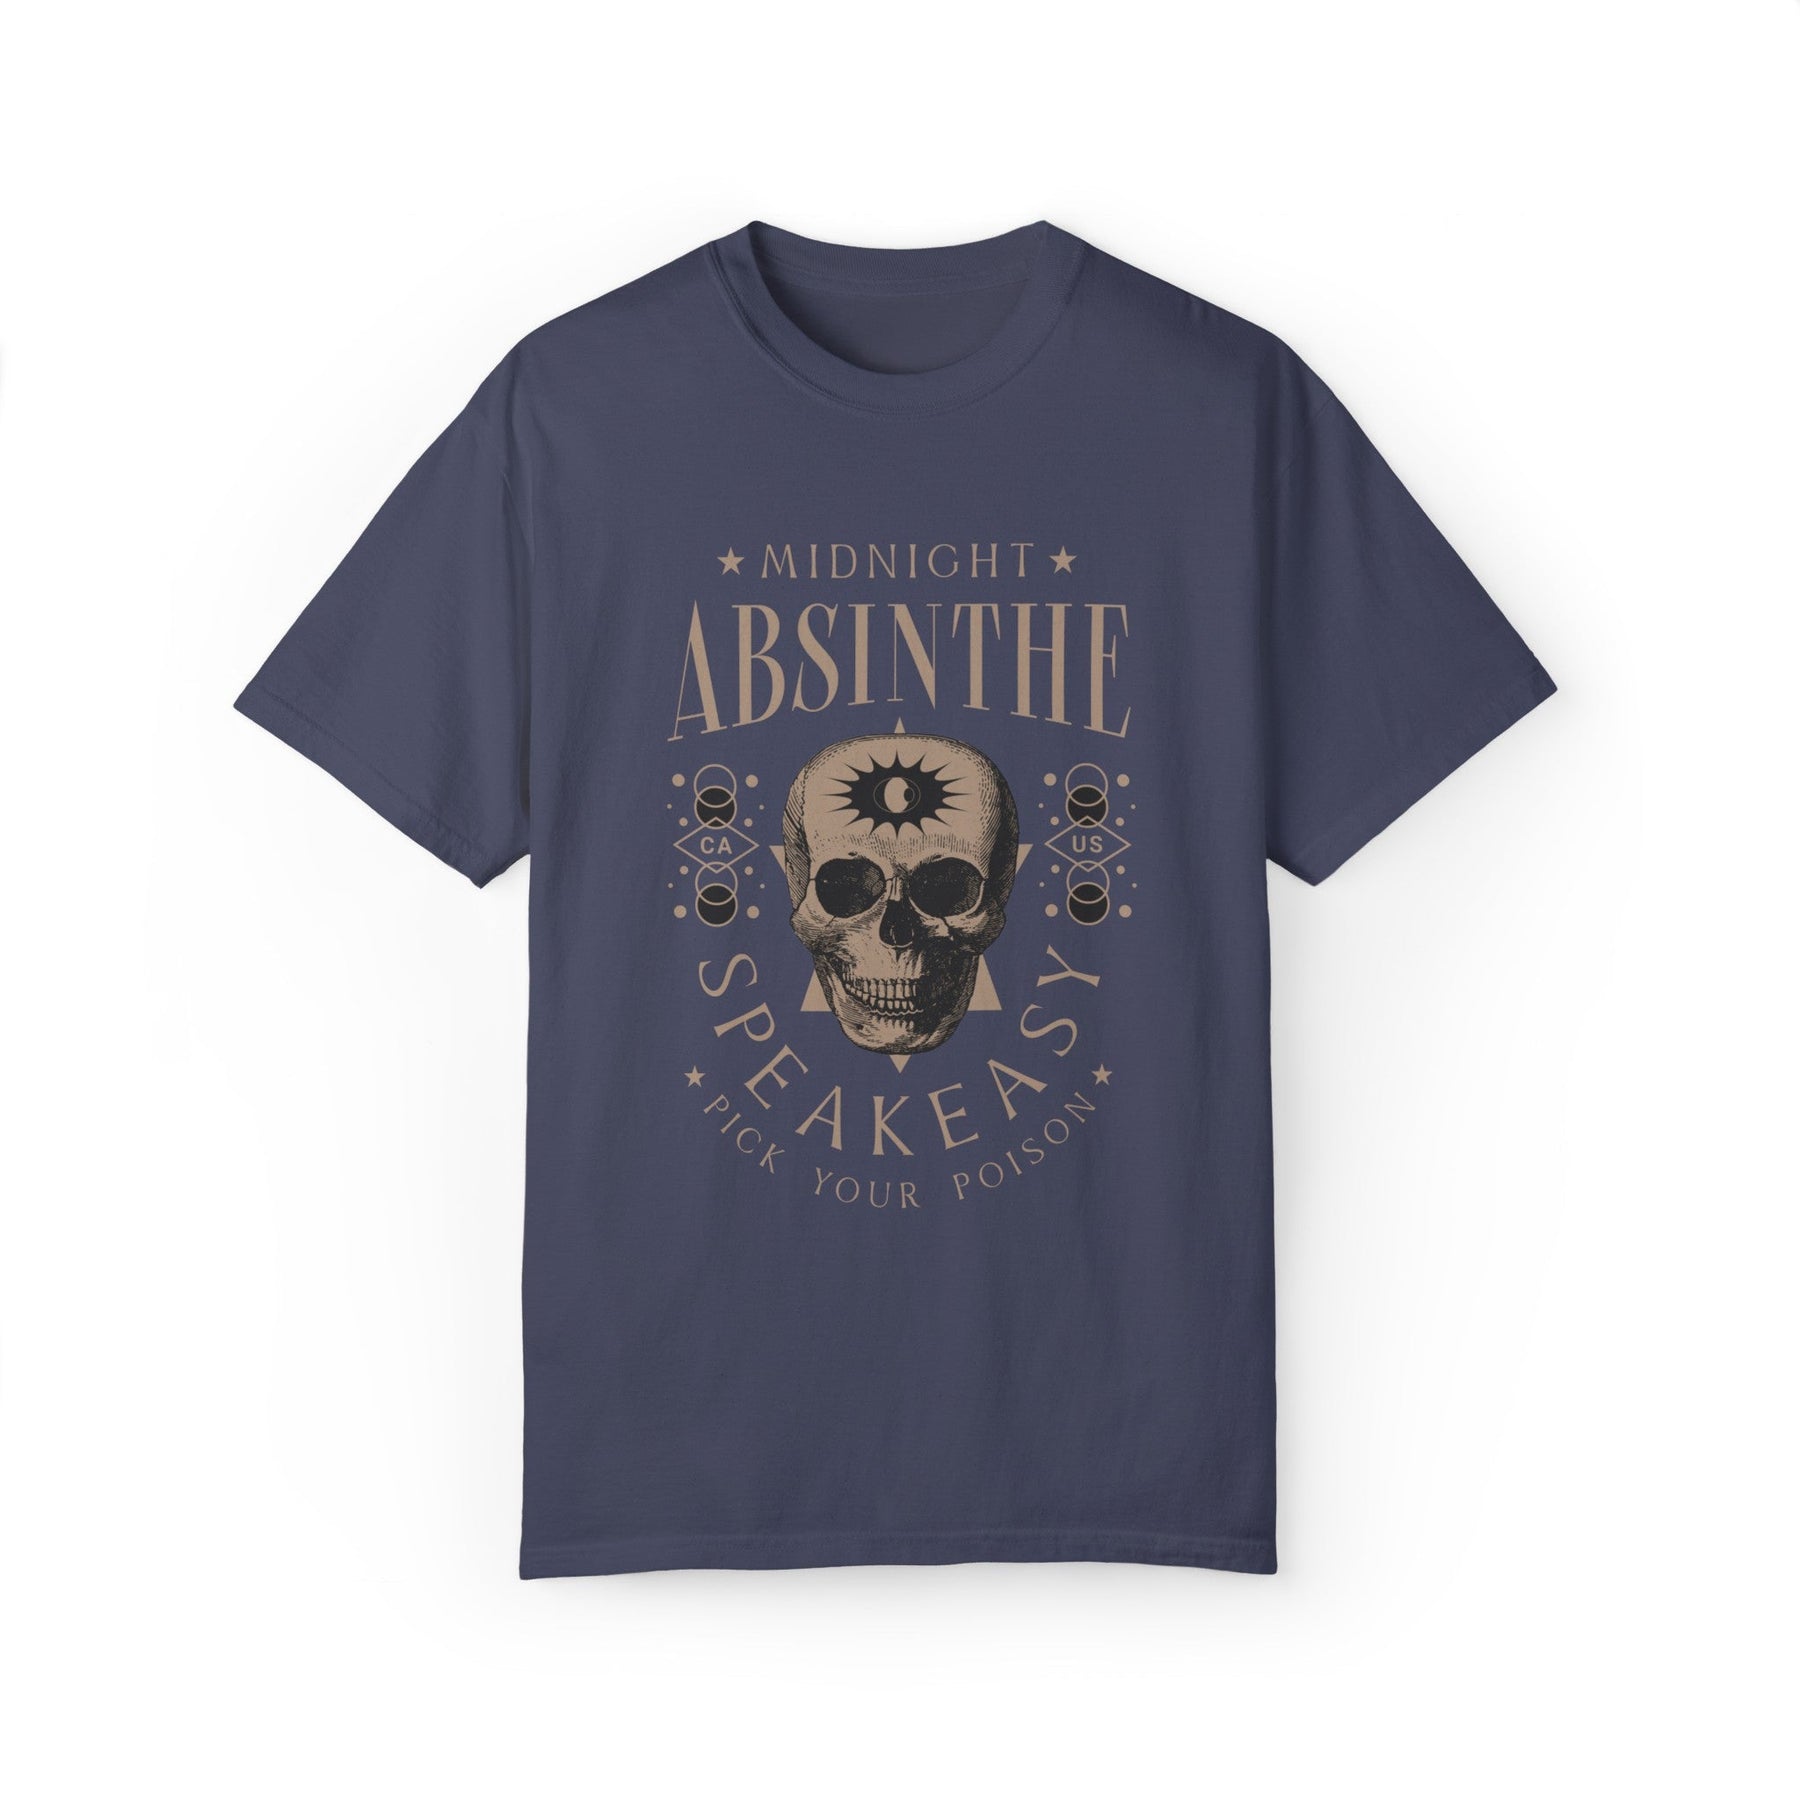 Midnight Absinthe Oversized Beefy Tee - Goth Cloth Co.T - Shirt31847001079252636636